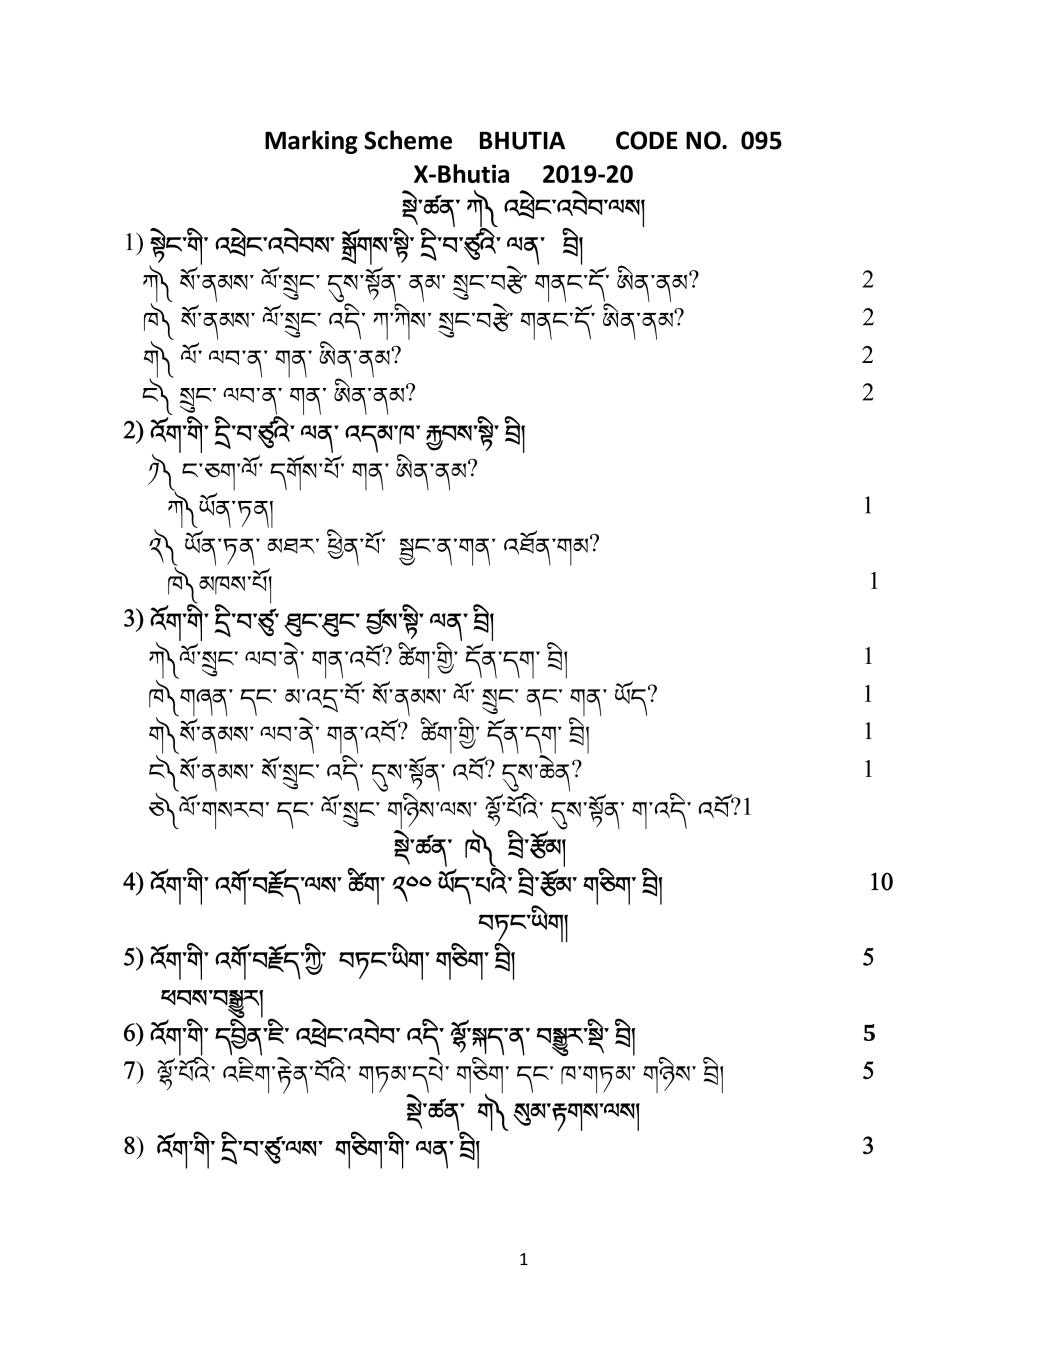 CBSE Class 10 Marking Scheme 2020 for Bhutia - Page 1